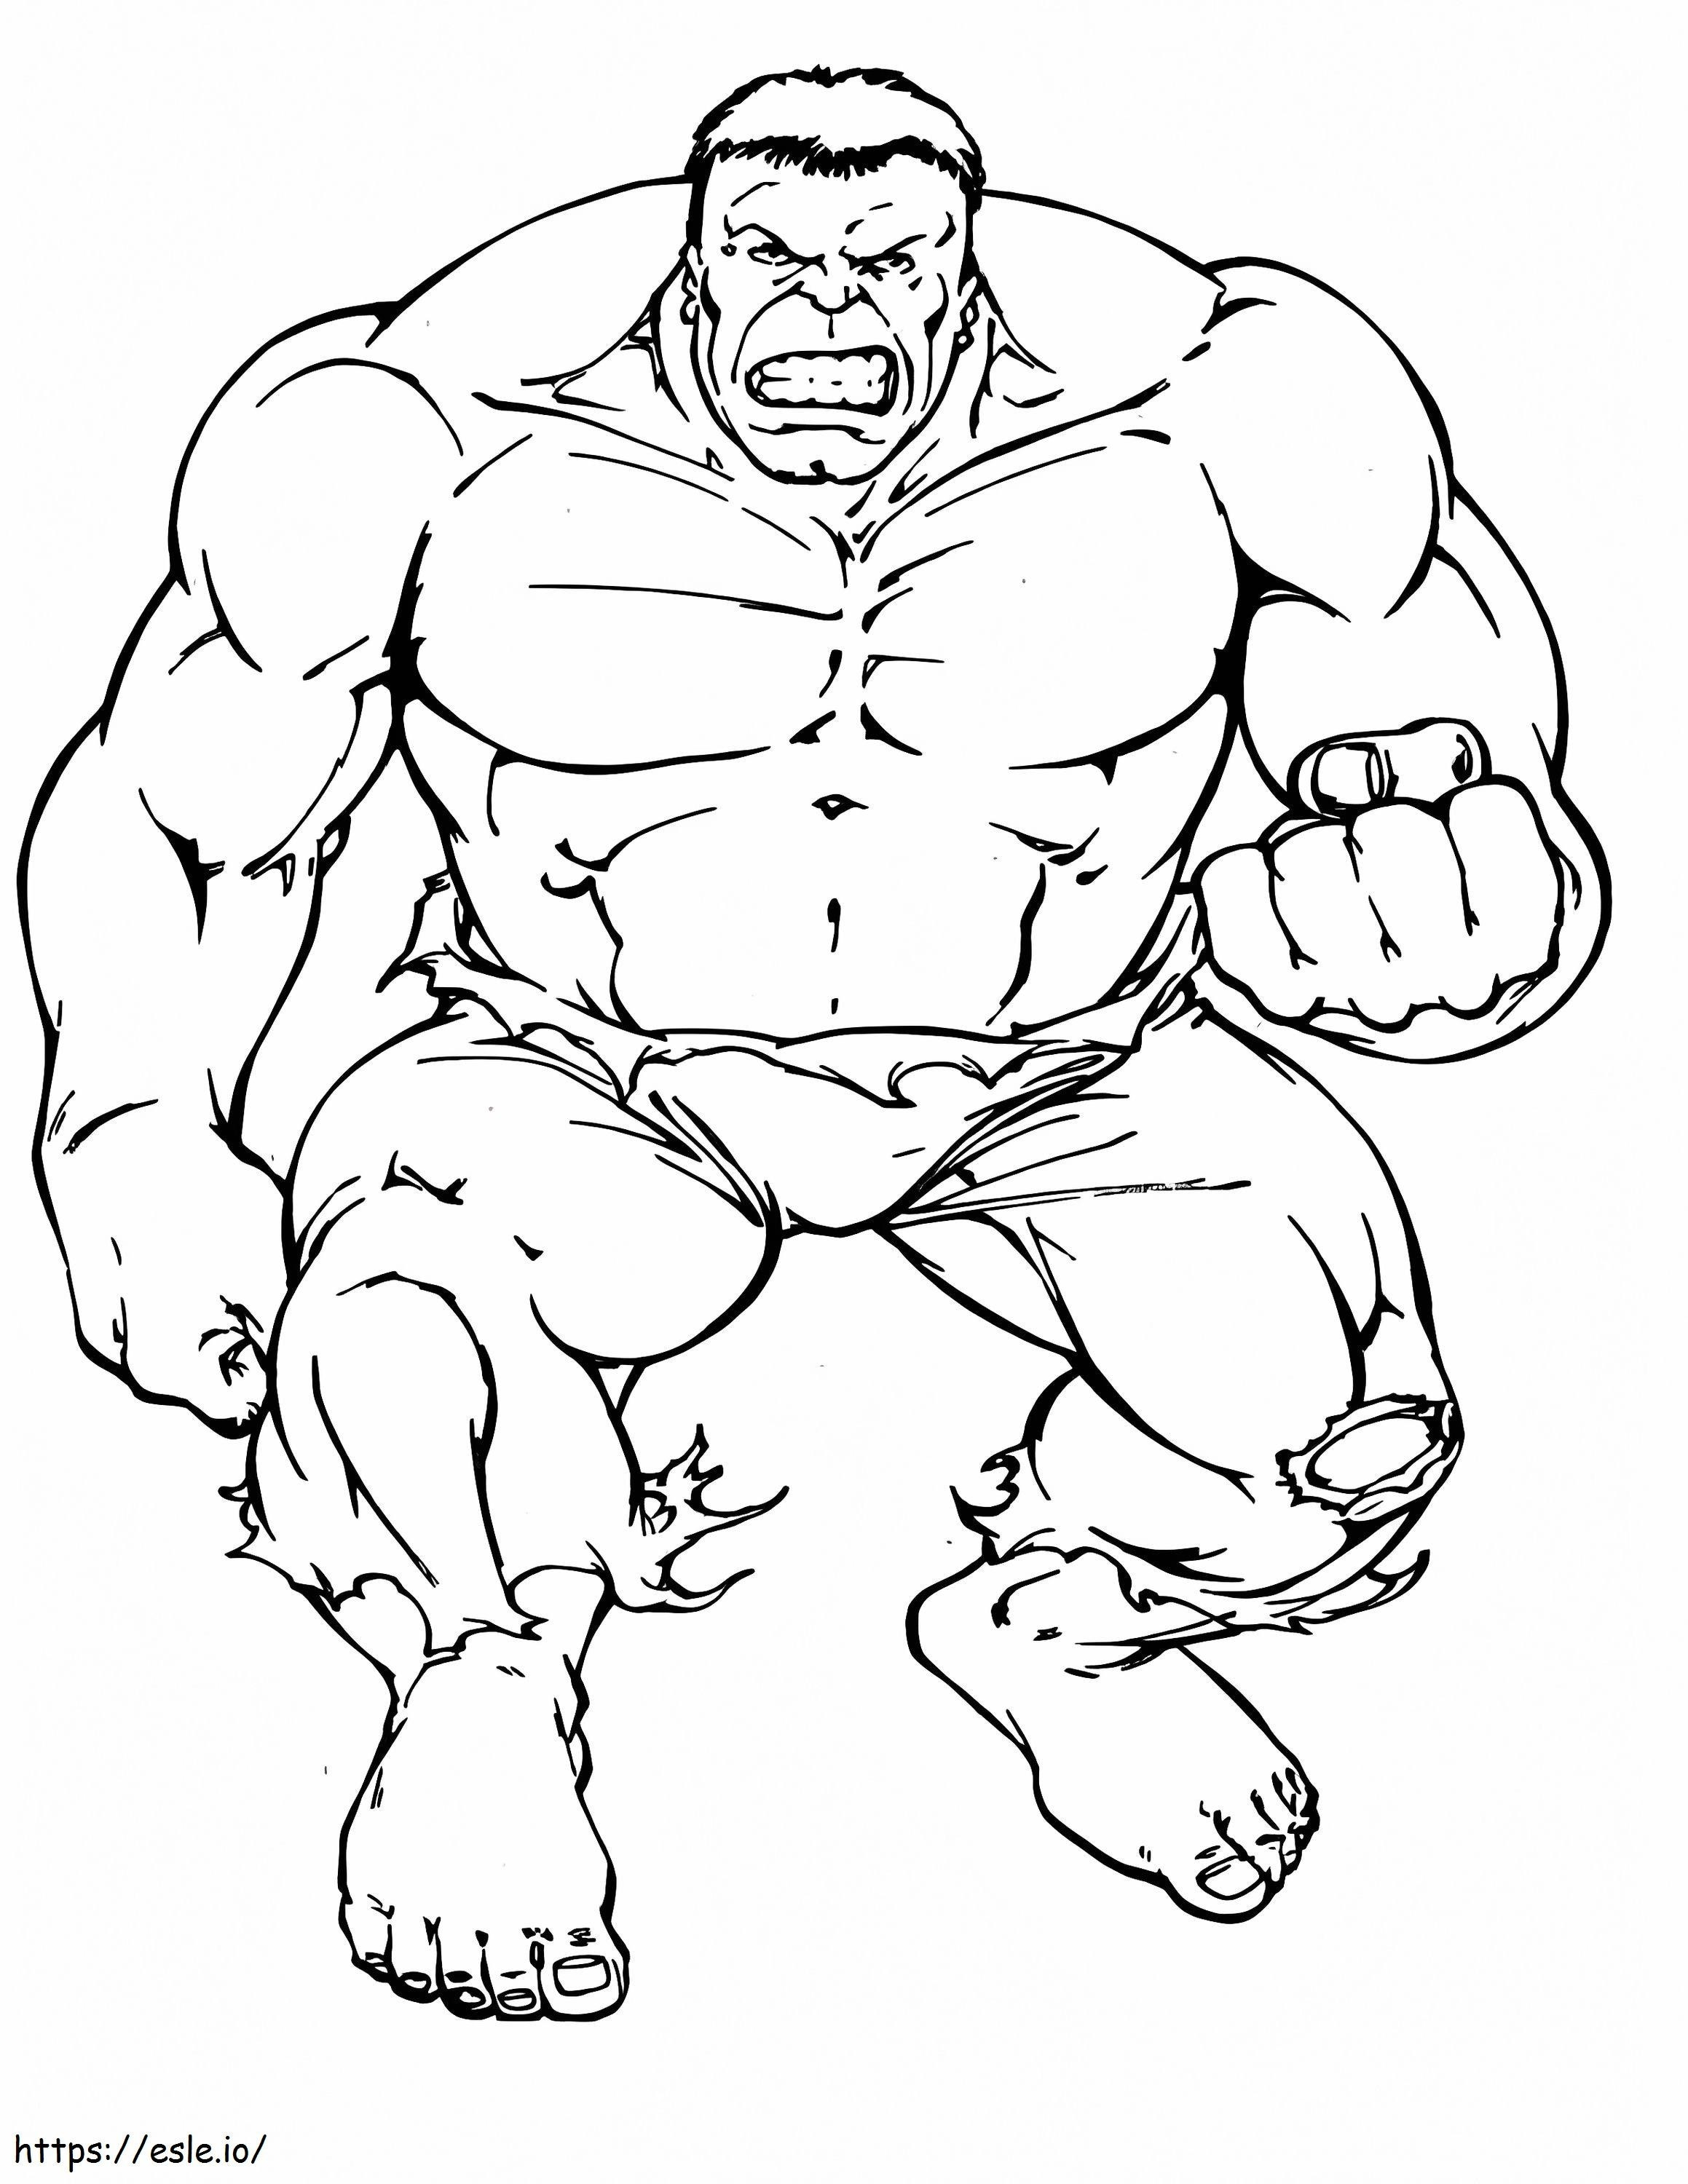 Cool Hulk coloring page